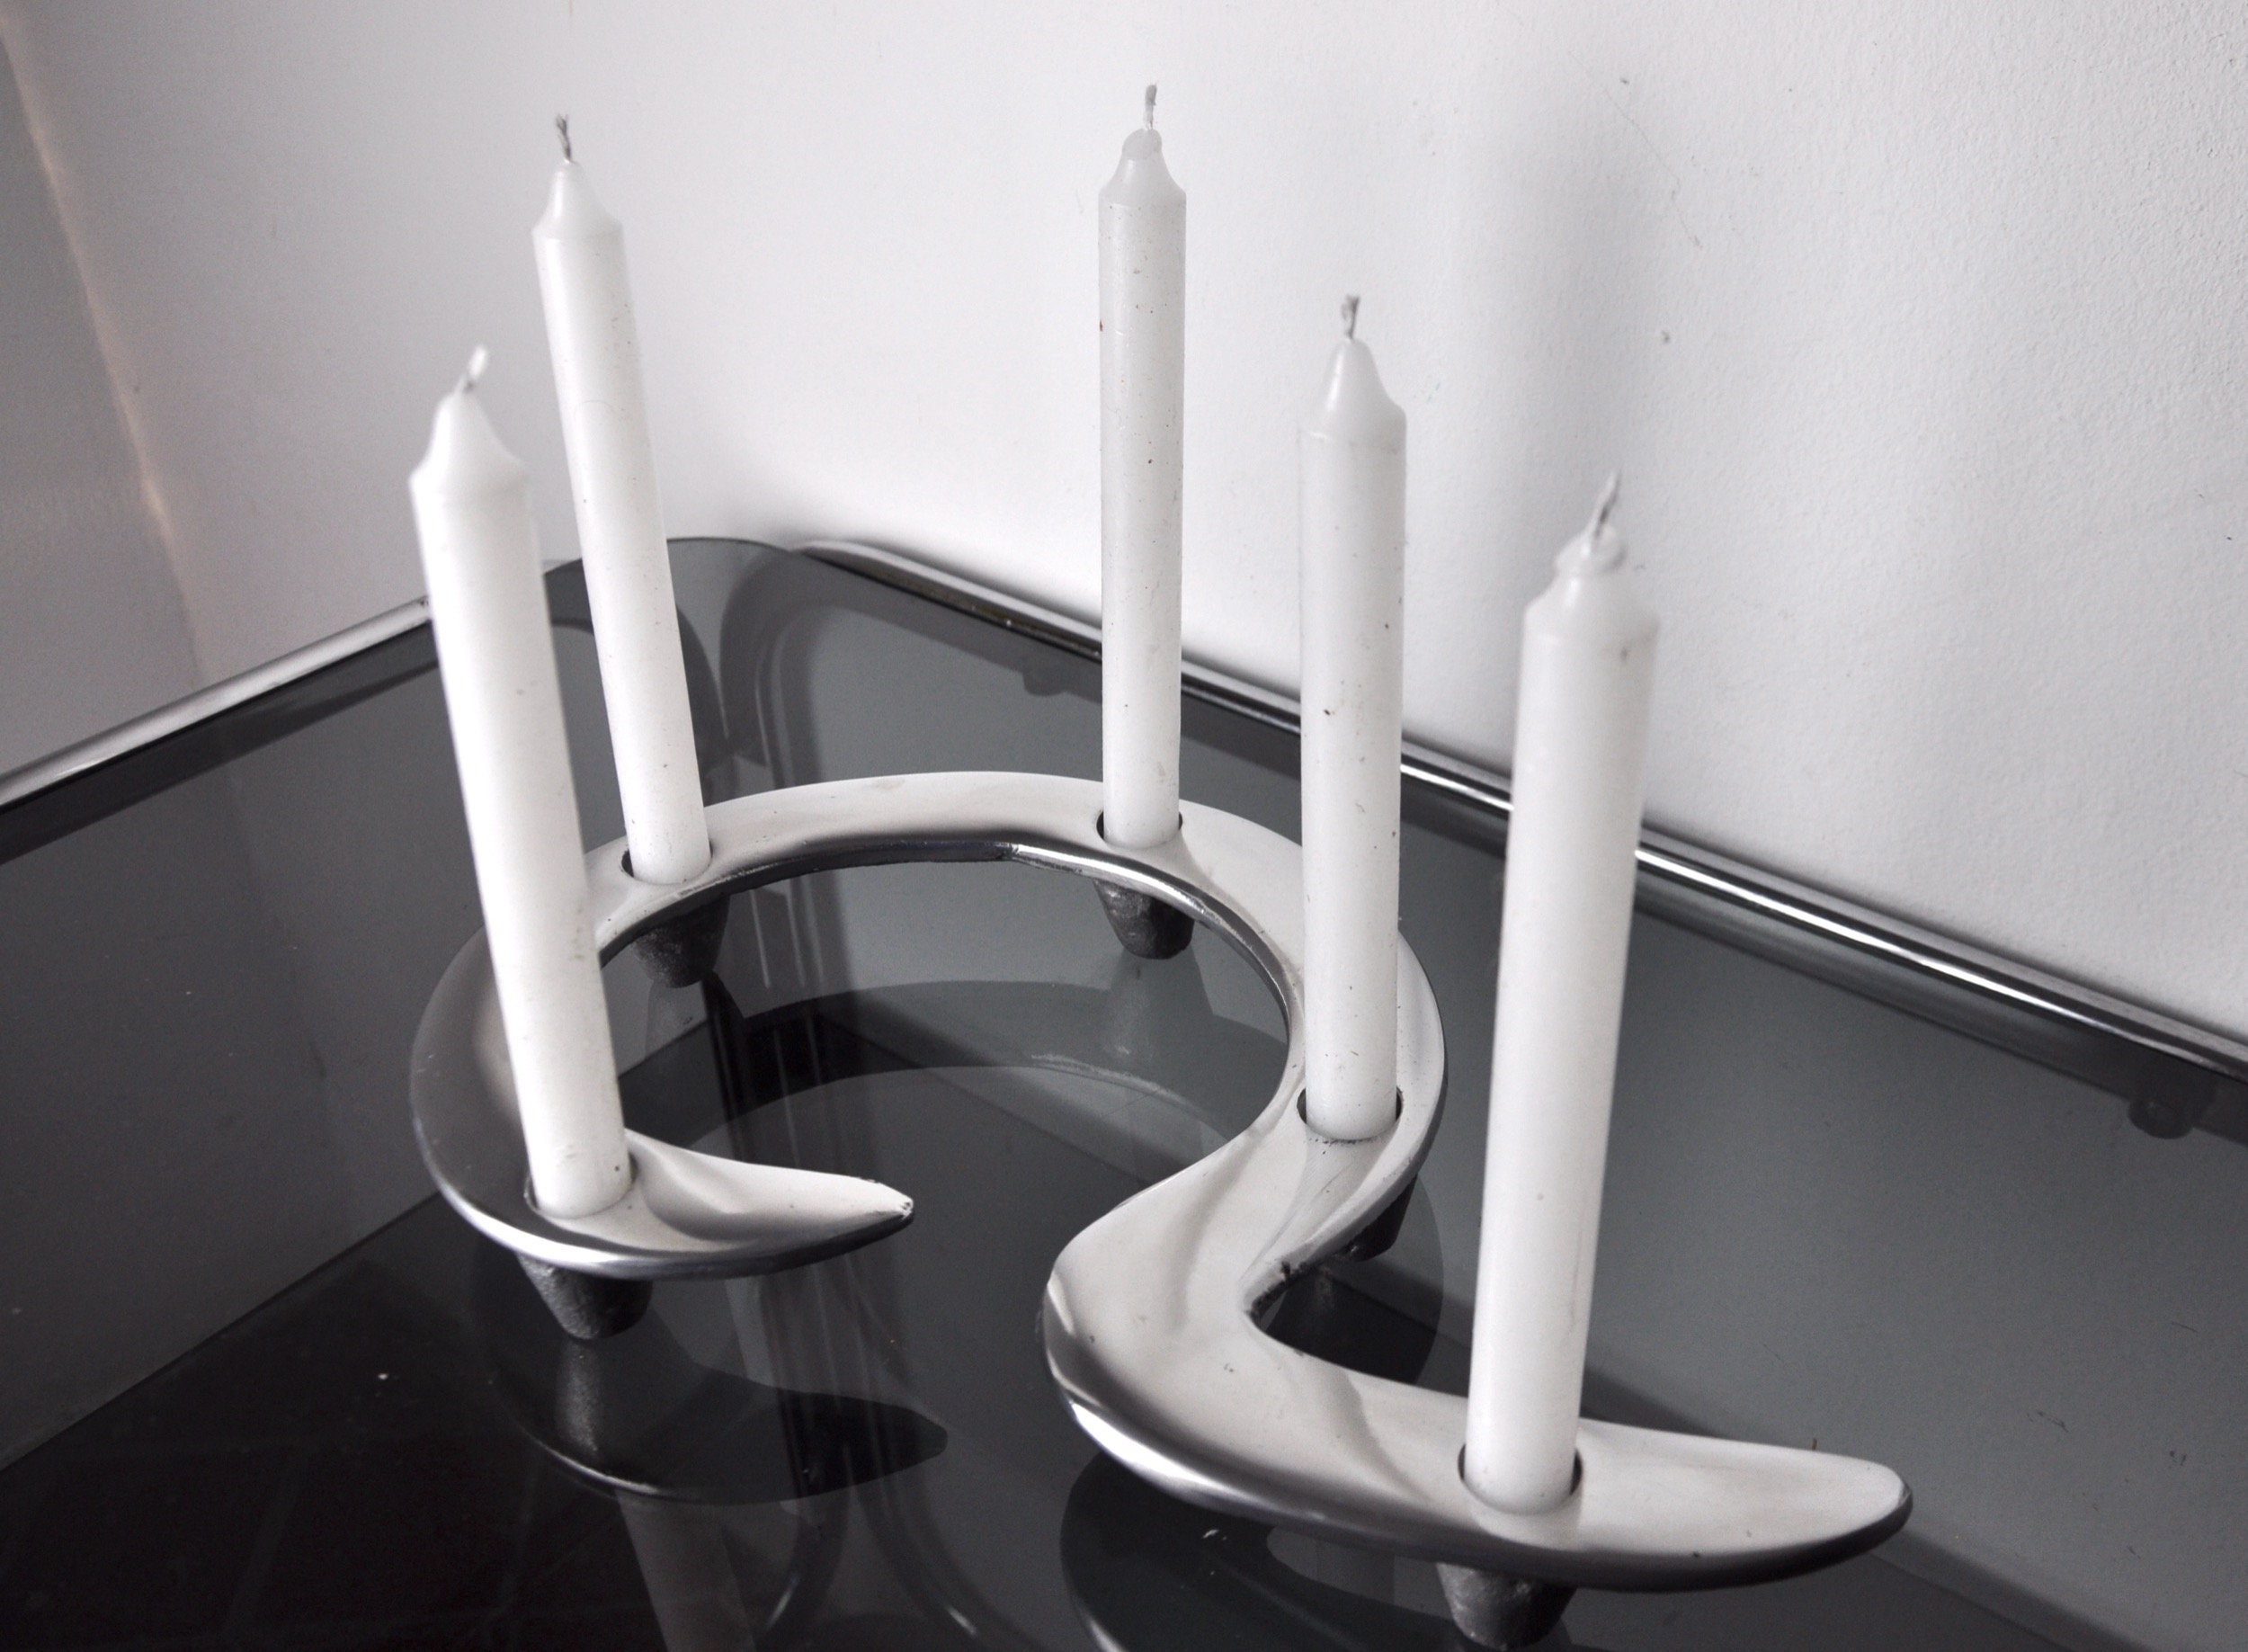 Aluminum Arclumis Swan Candlesticks by Matthew Hilton for SCP England, 1987